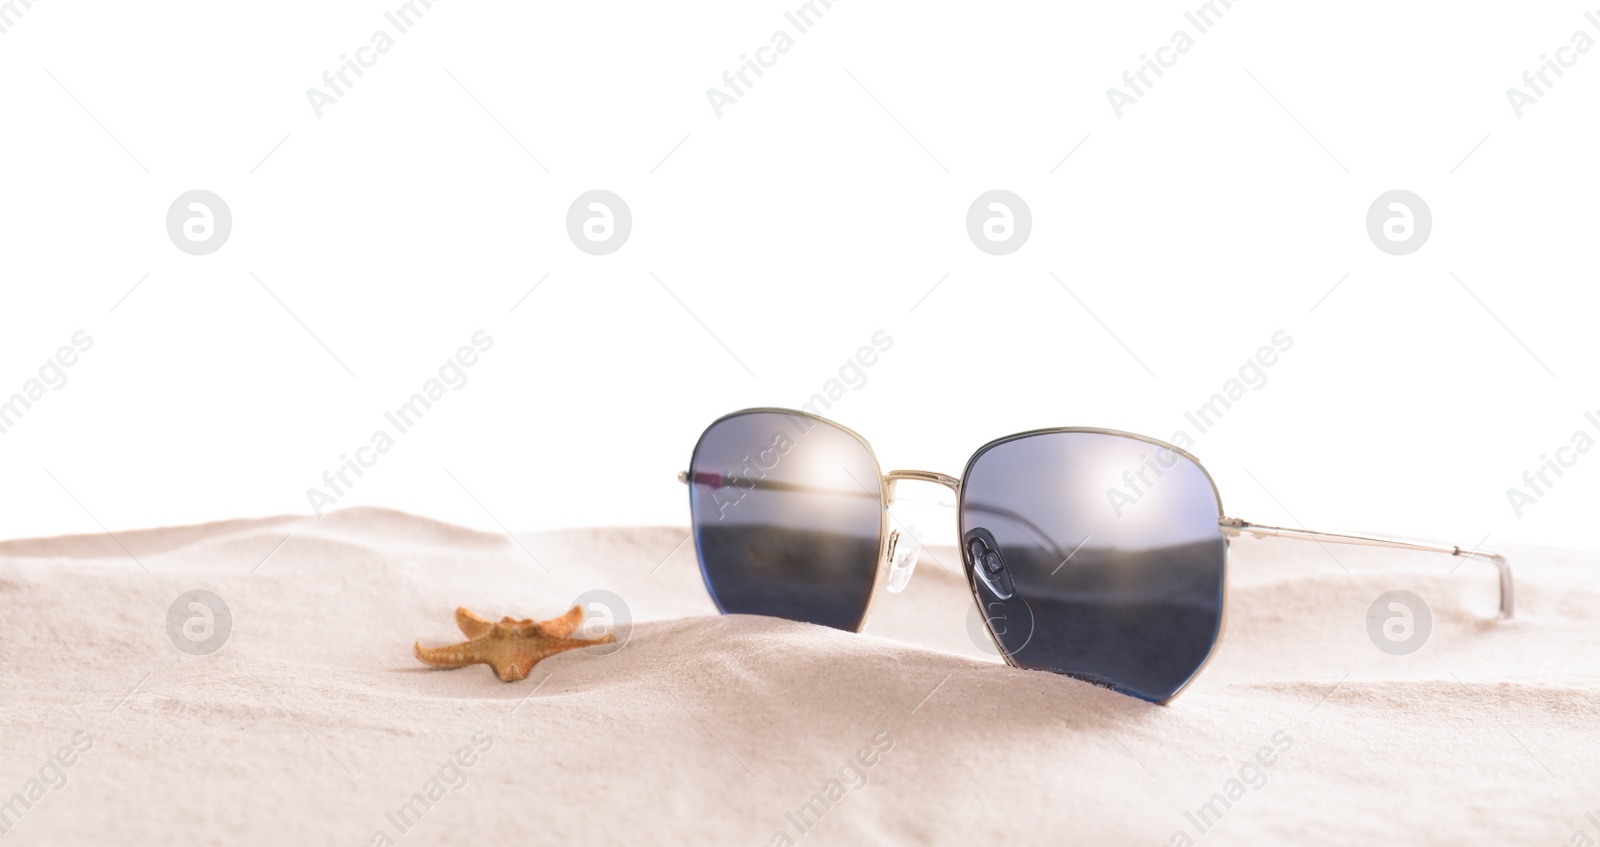 Photo of Stylish sunglasses and starfish on sand against white background